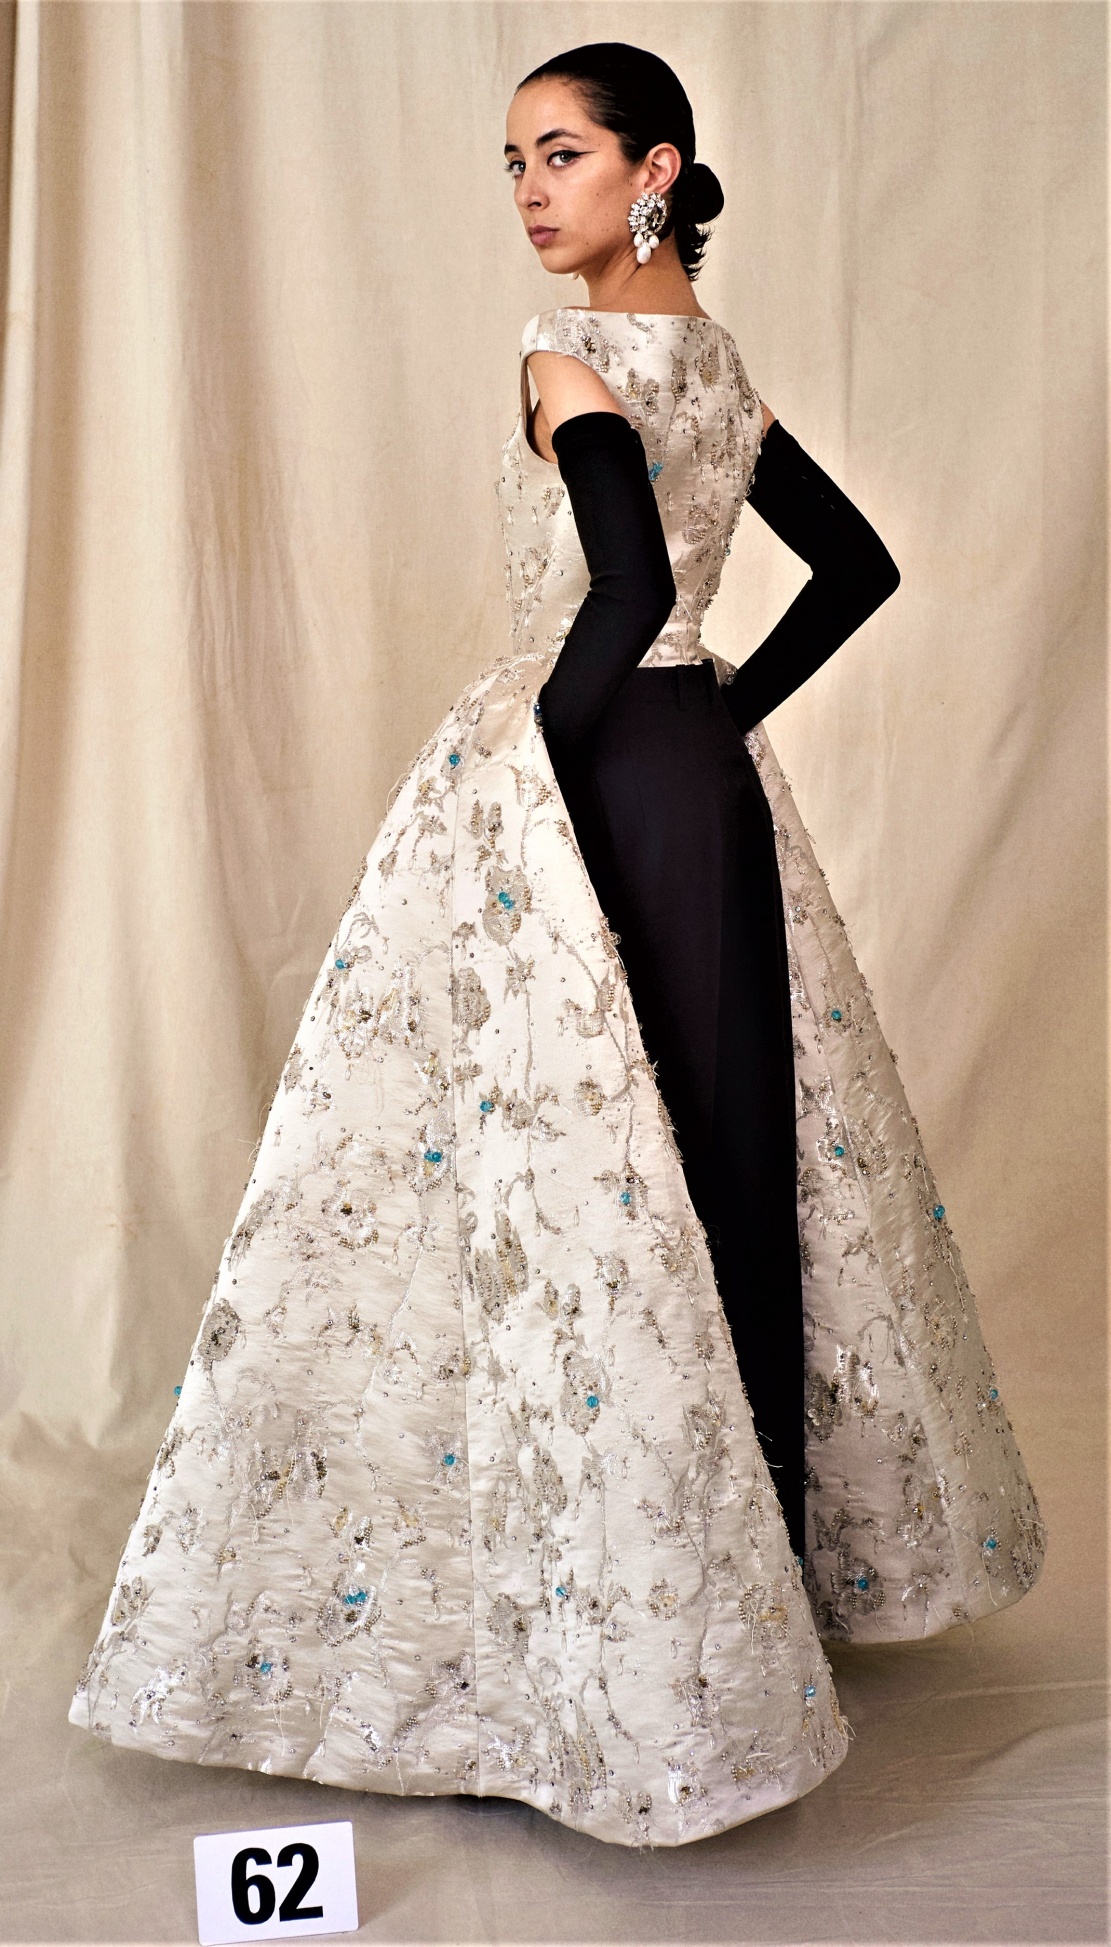 Balenciaga Couture Fall 21 wht blk gown cropped.jpg